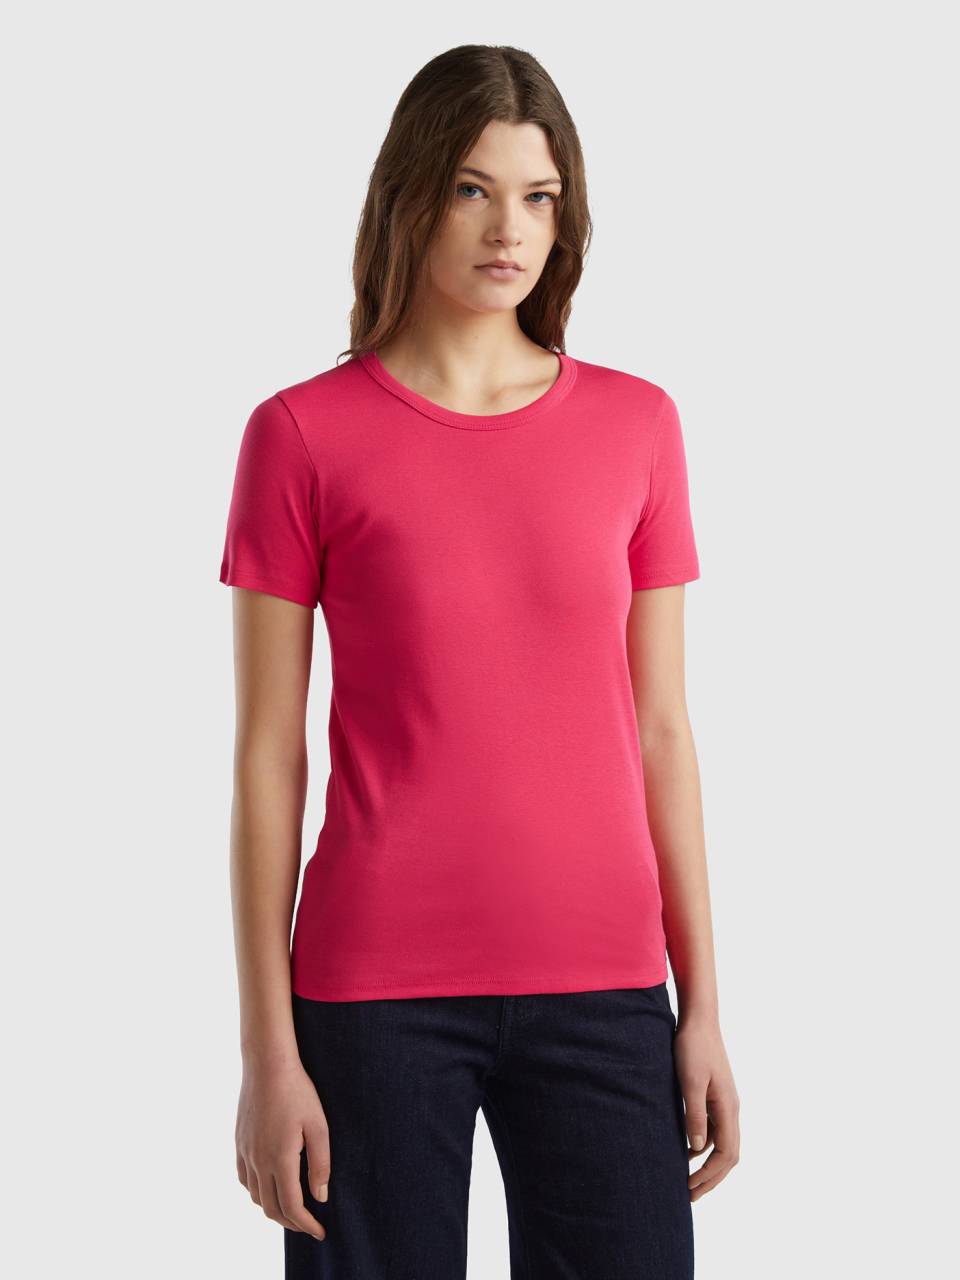 Long - Fuchsia t-shirt | Benetton fiber cotton